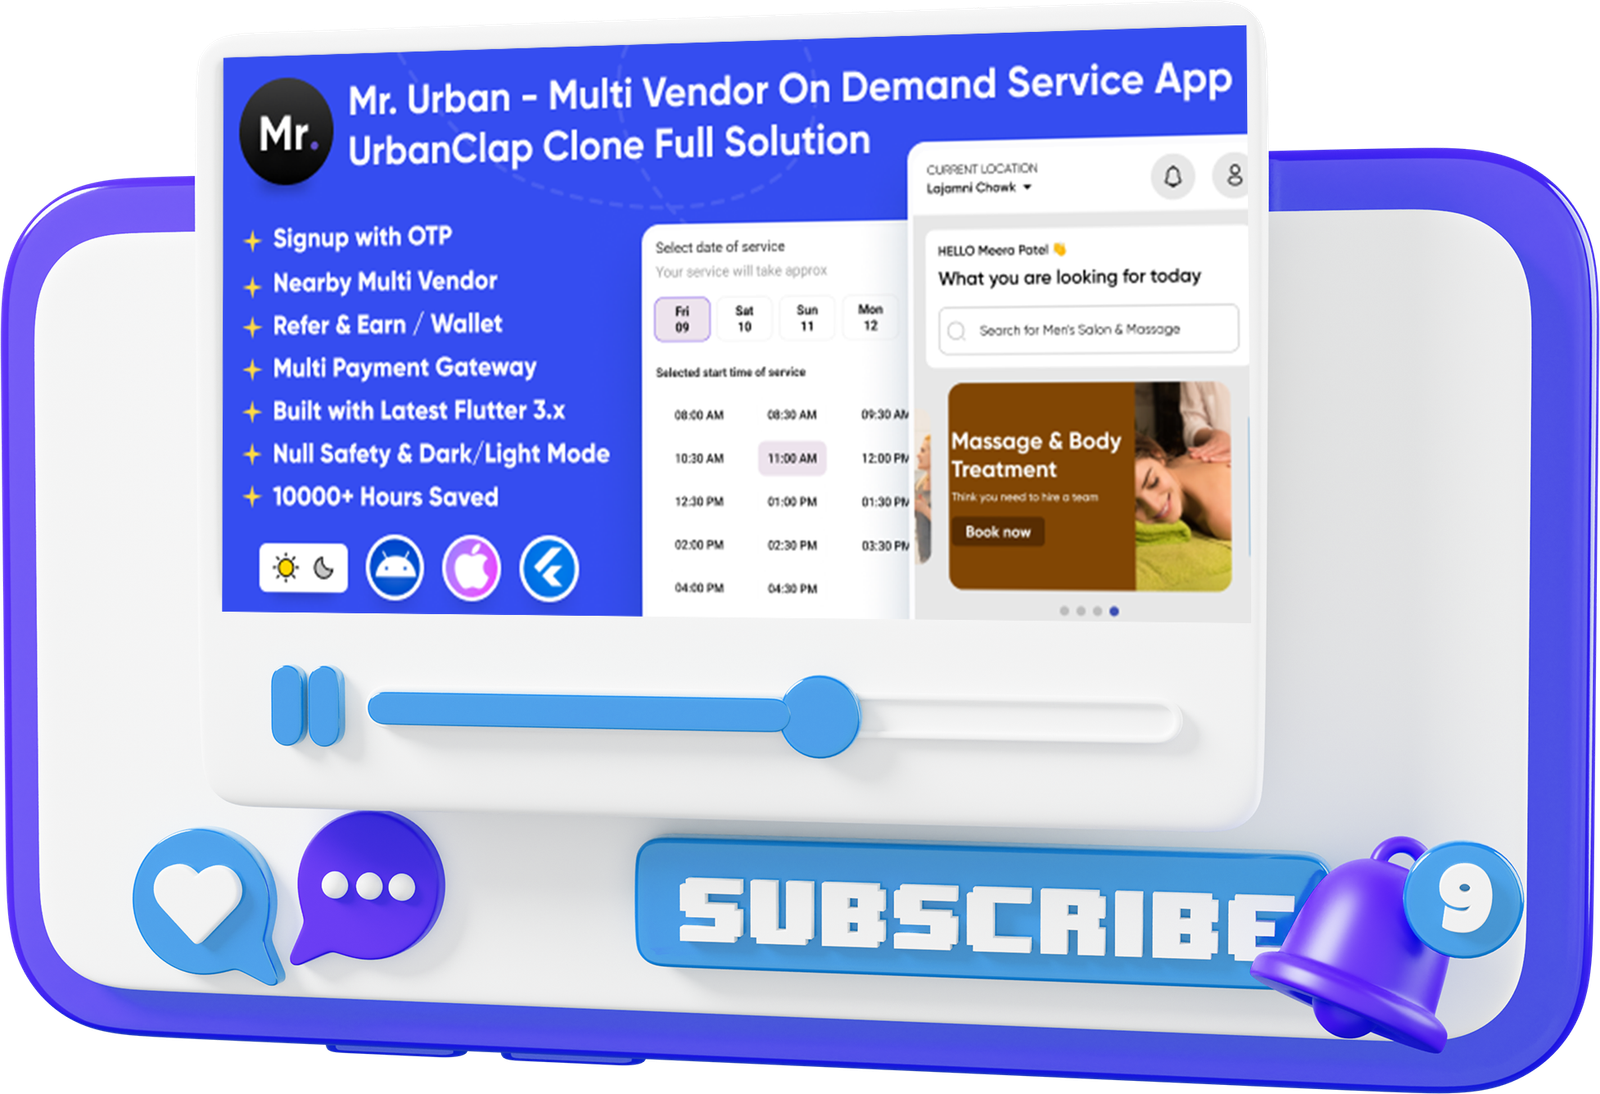 Mr. Urban - Service Man App | On Demand Service App | Doorstep Services Marketplace | Android & iOS - 4